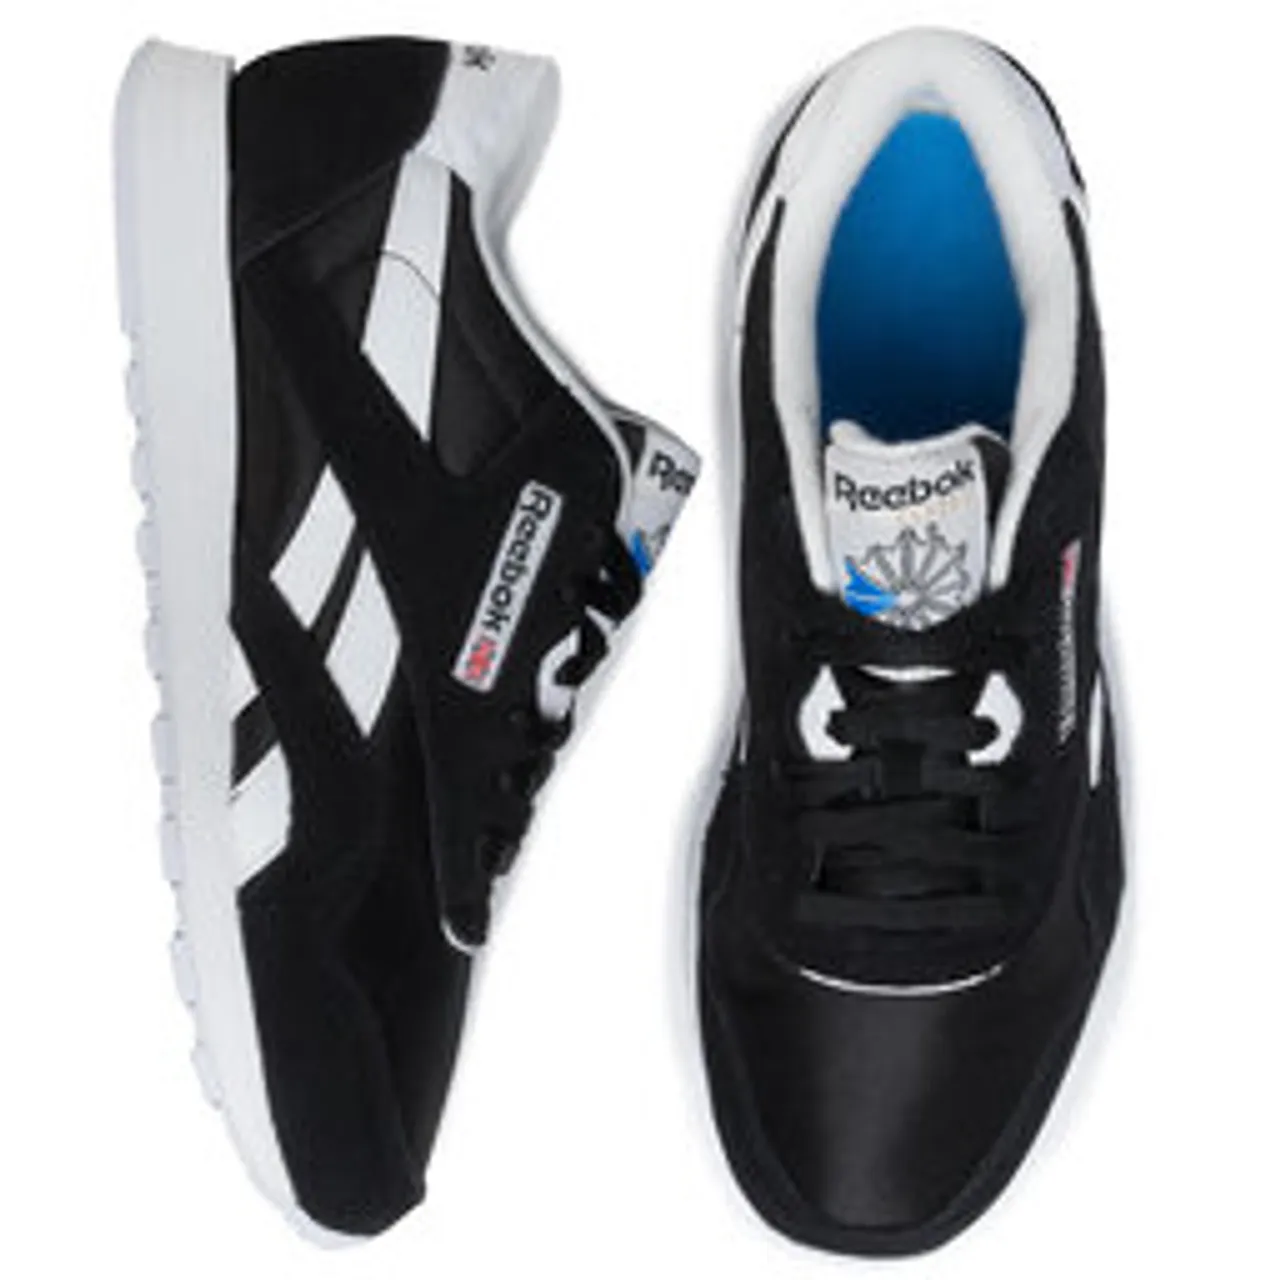 Schuhe Reebok Cl Nylon FV1592 Black/White/None